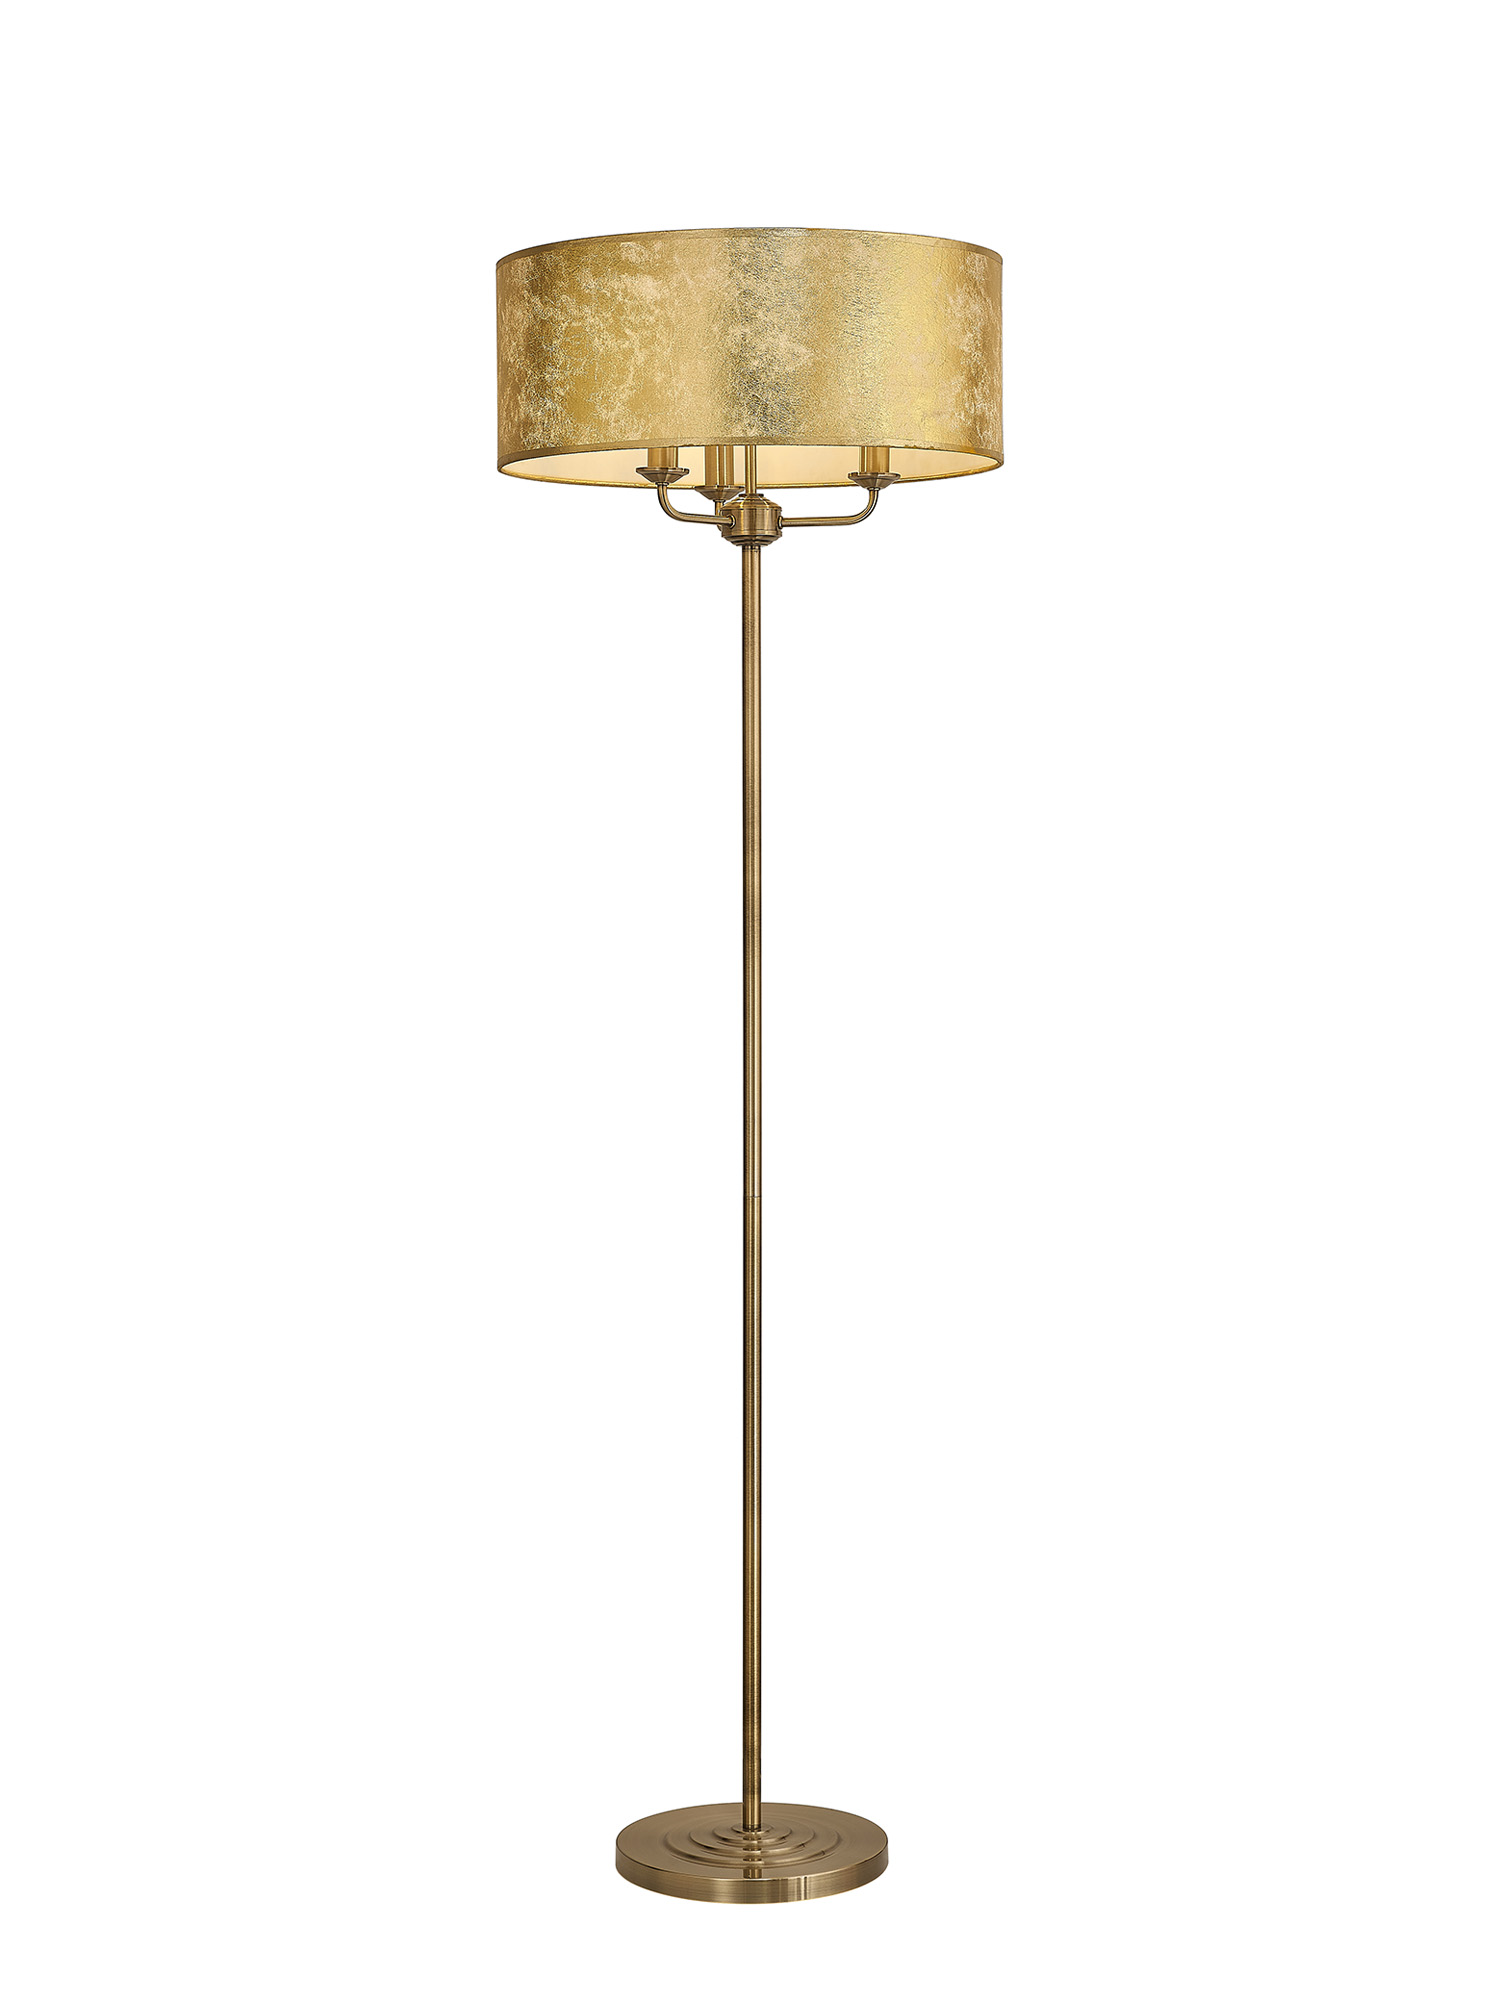 DK0919  Banyan 45cm 3 Light Floor Lamp Antique Brass; Gold Leaf